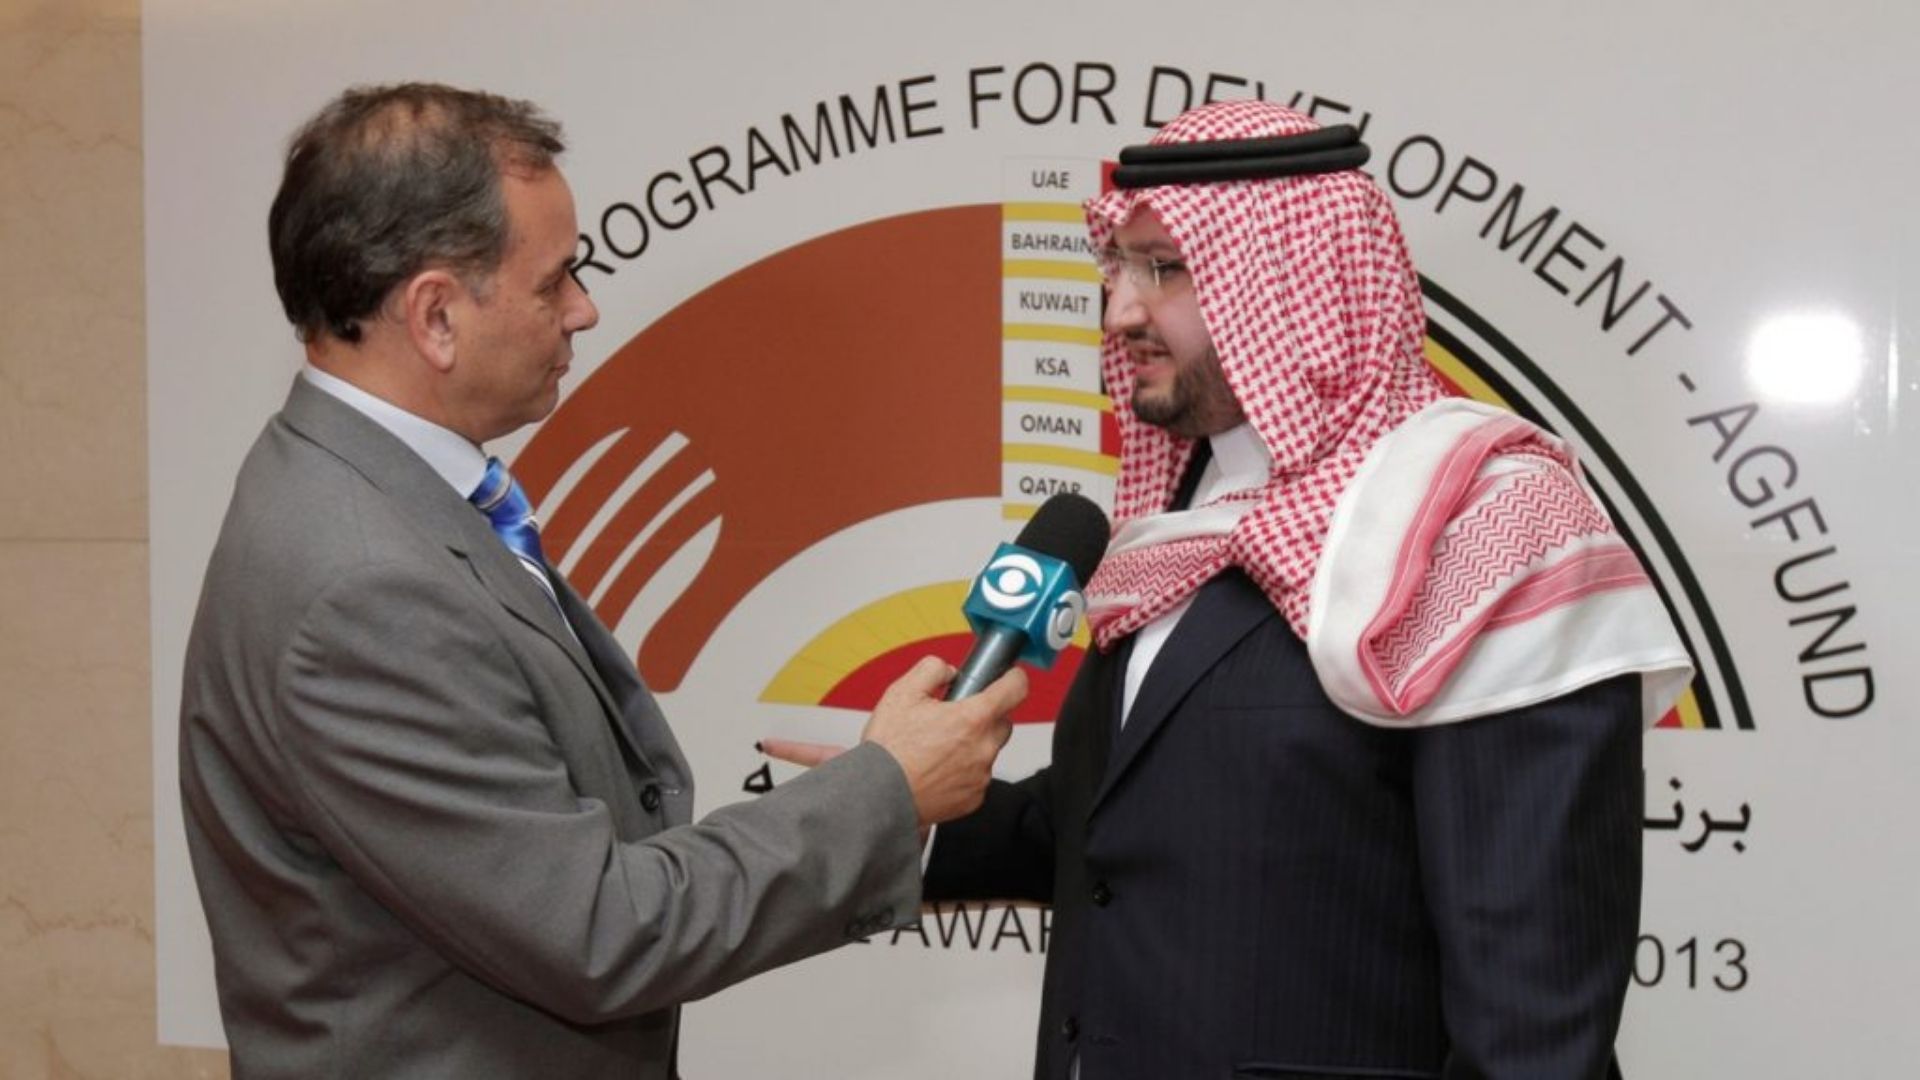 Prince Talal International Prize for Human Development 2012